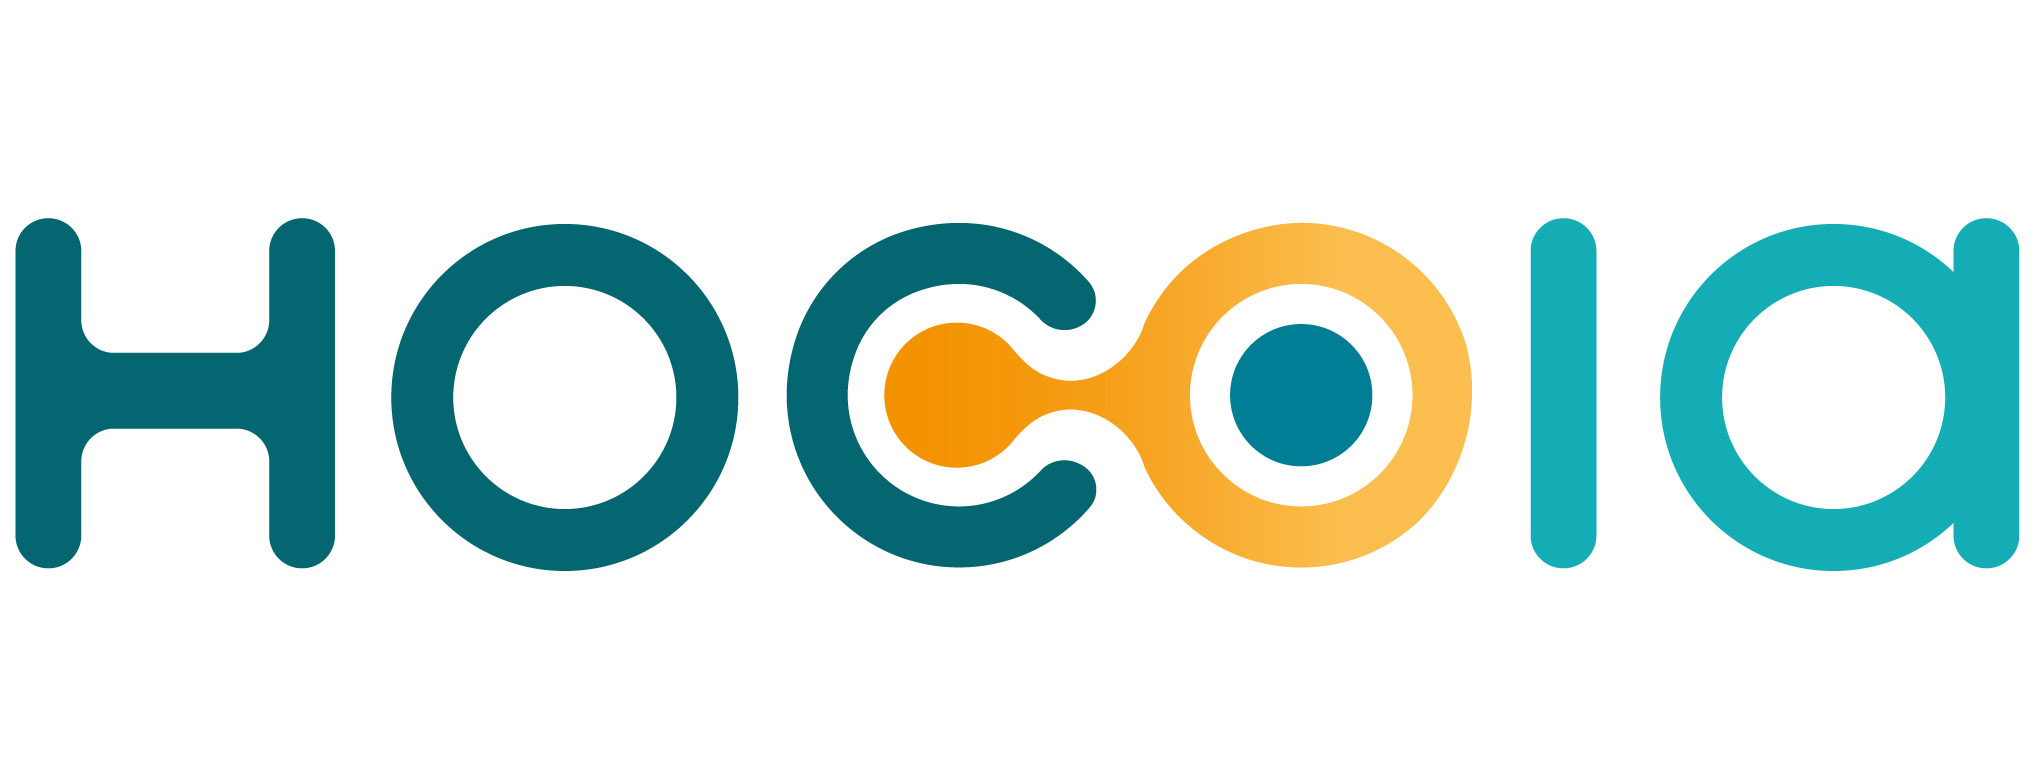 Logo de l'entreprise HOCOIA.